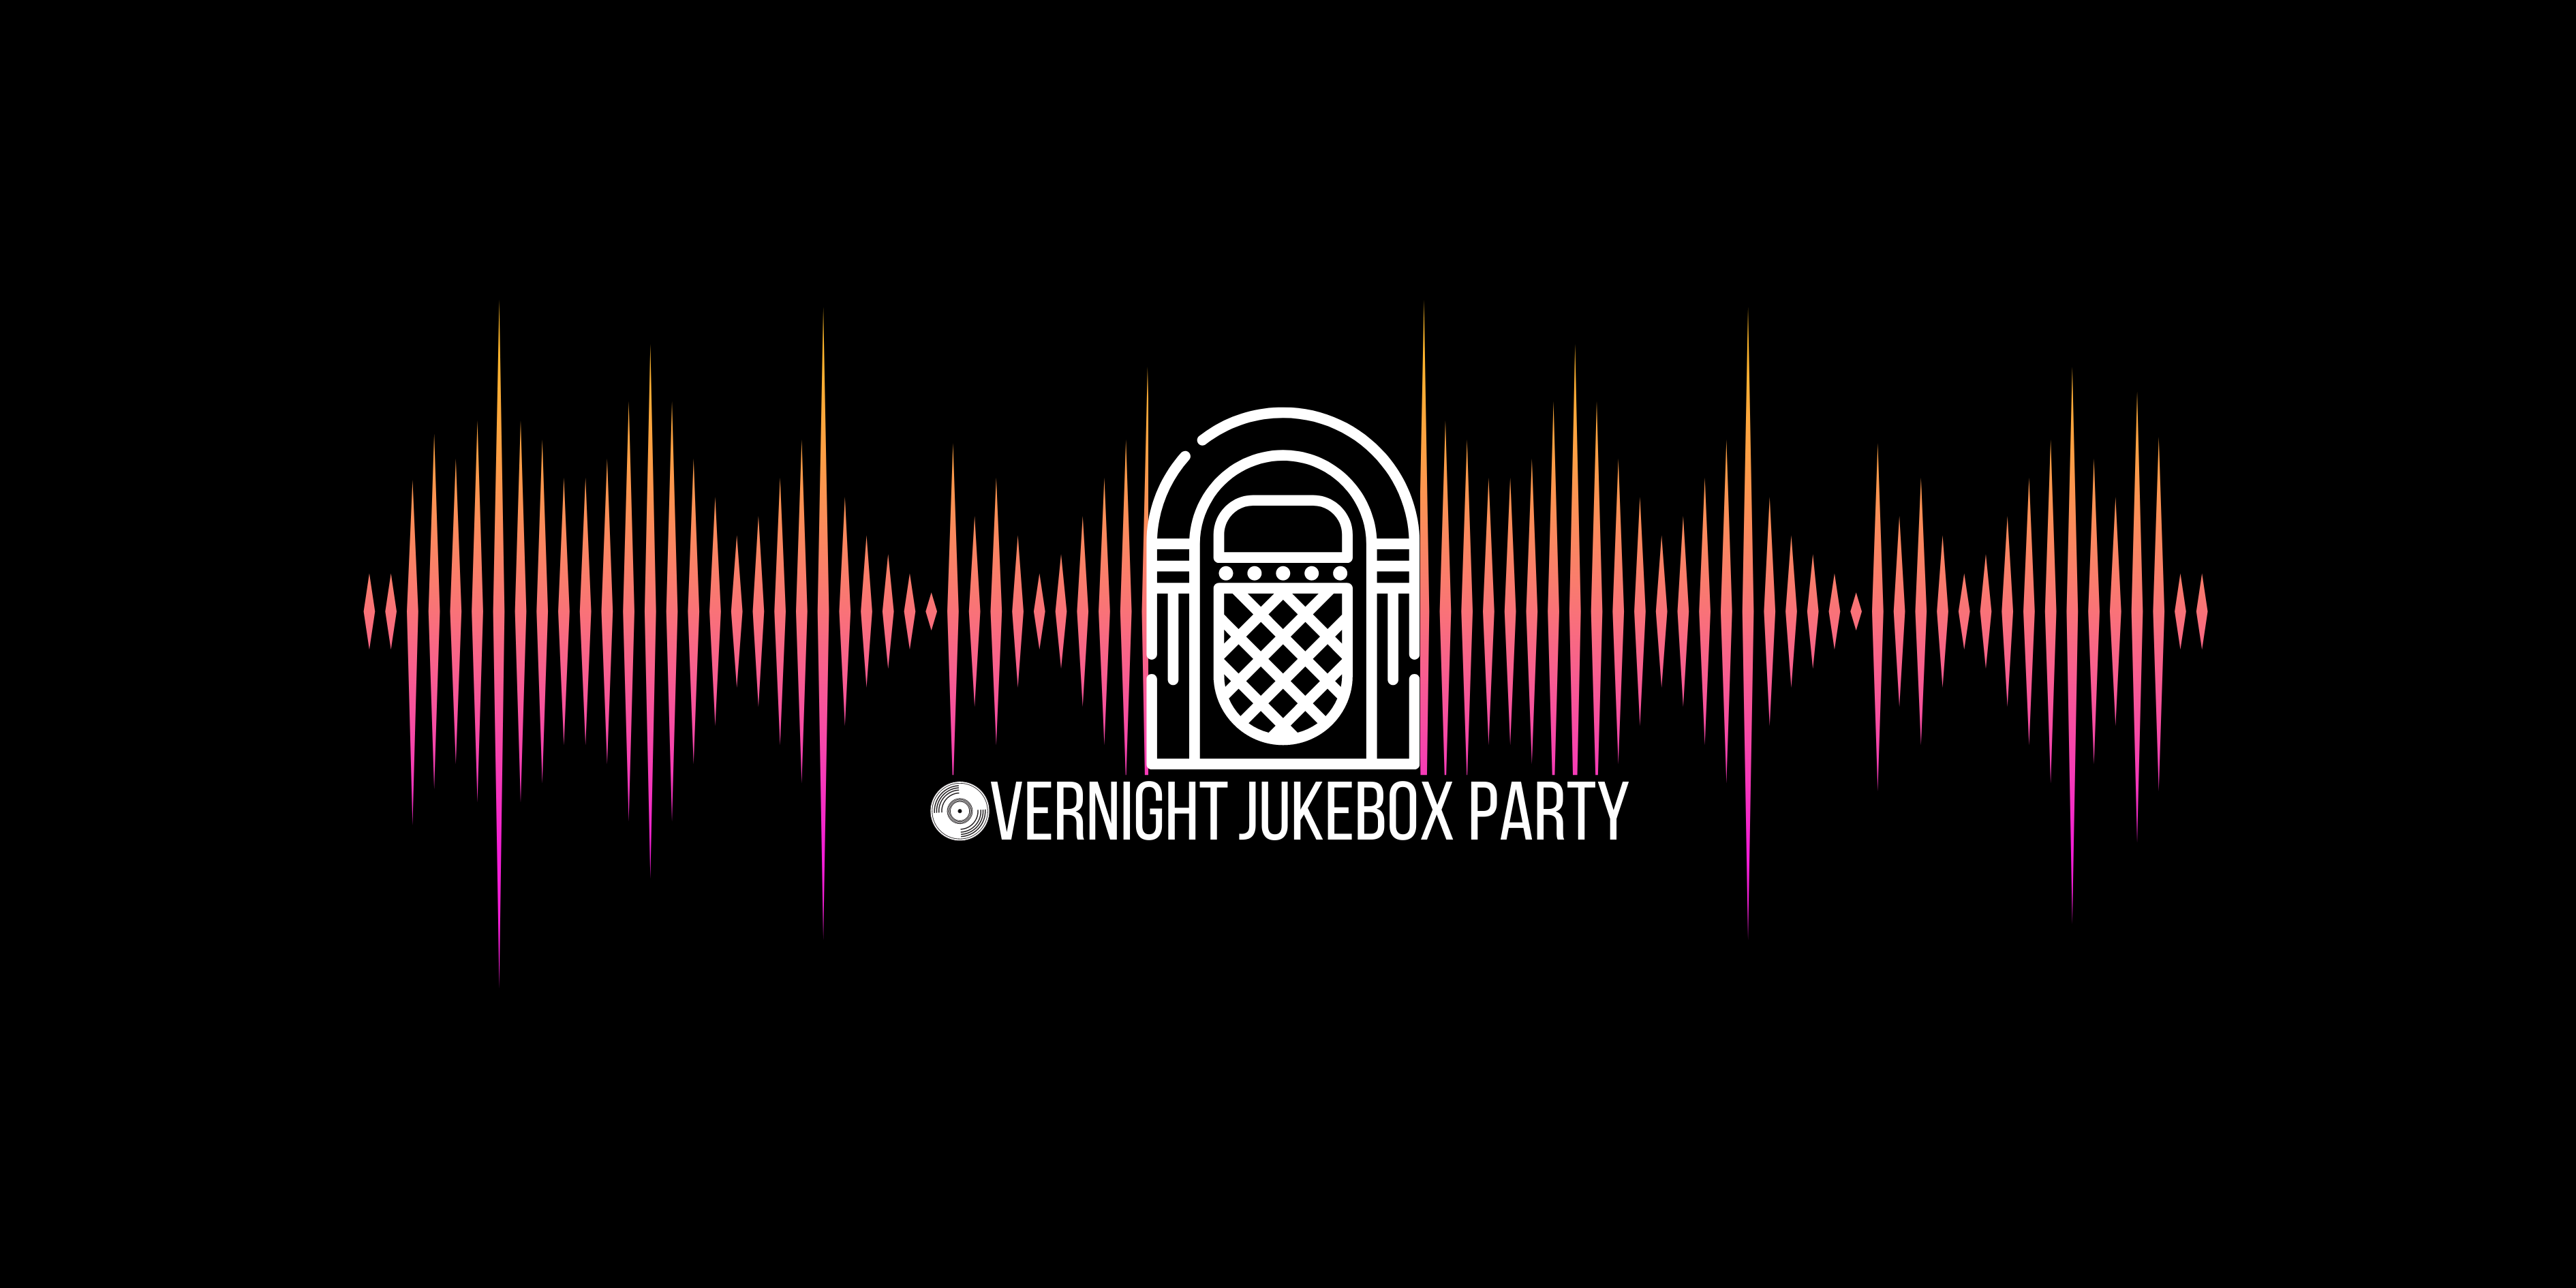 Overnight Jukebox Party